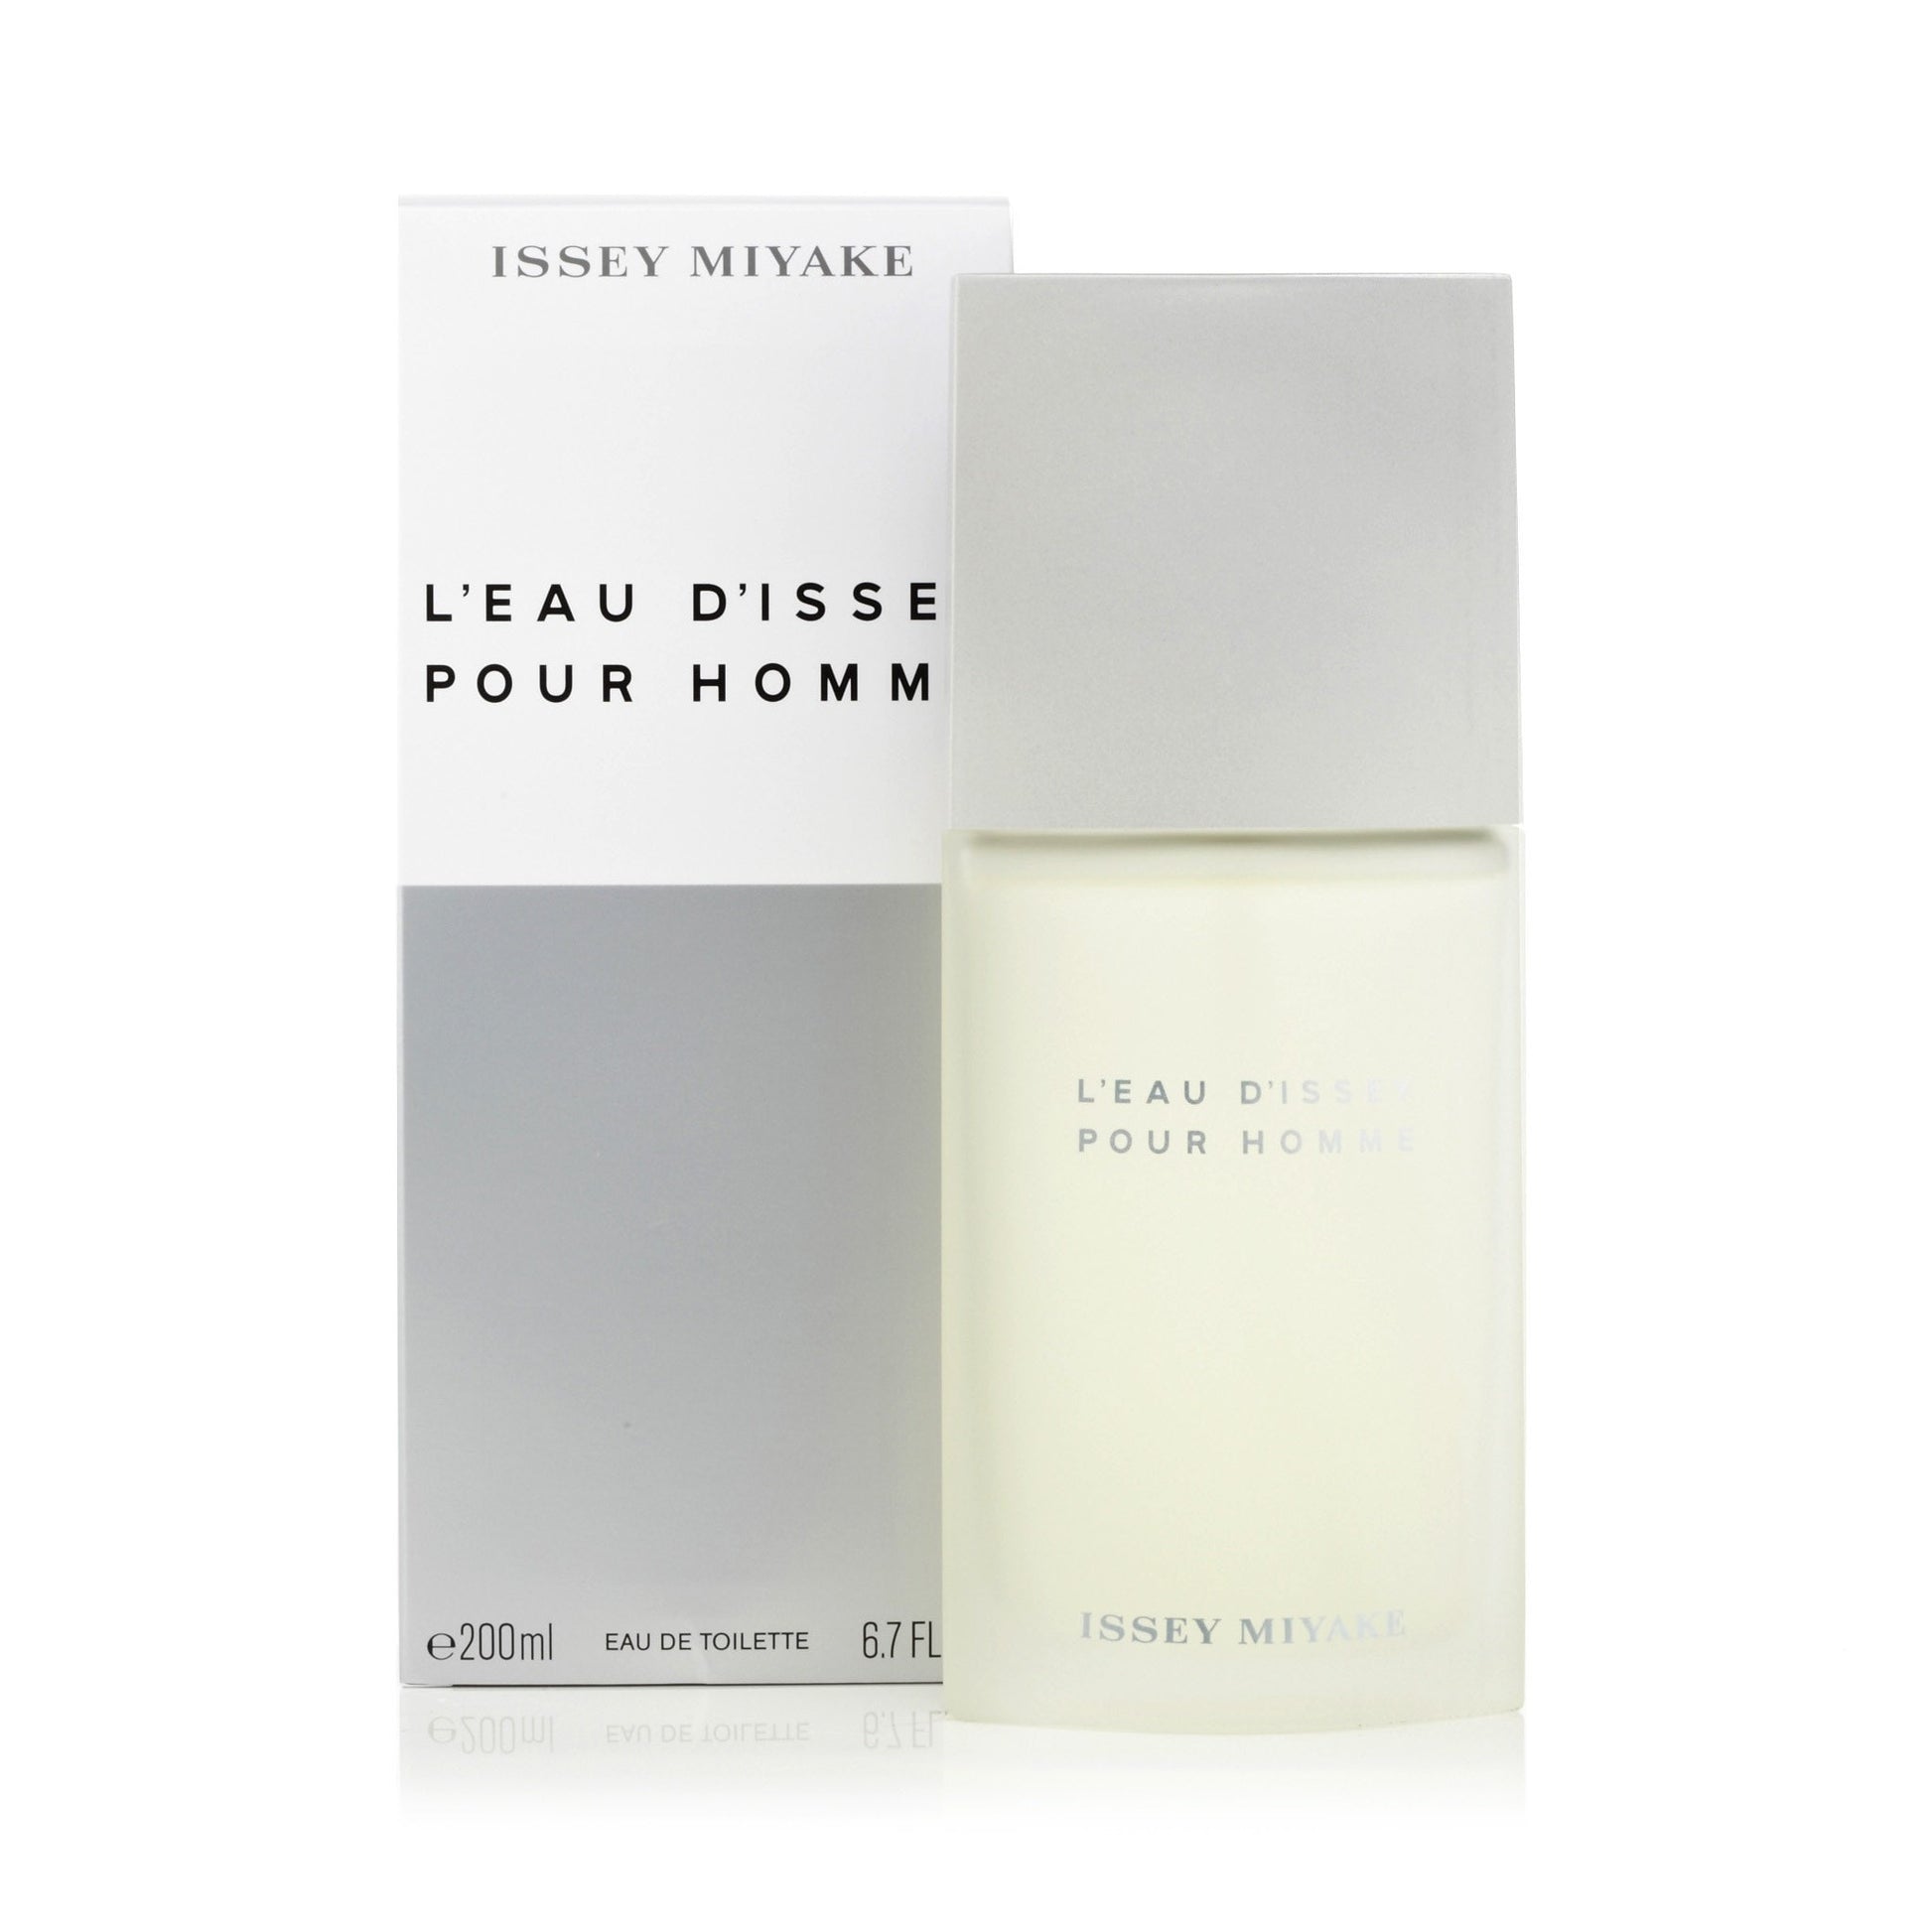  L'Eau Dissey Eau de Toilette Spray for Men by Issey Miyake 6.7 oz. Click to open in modal